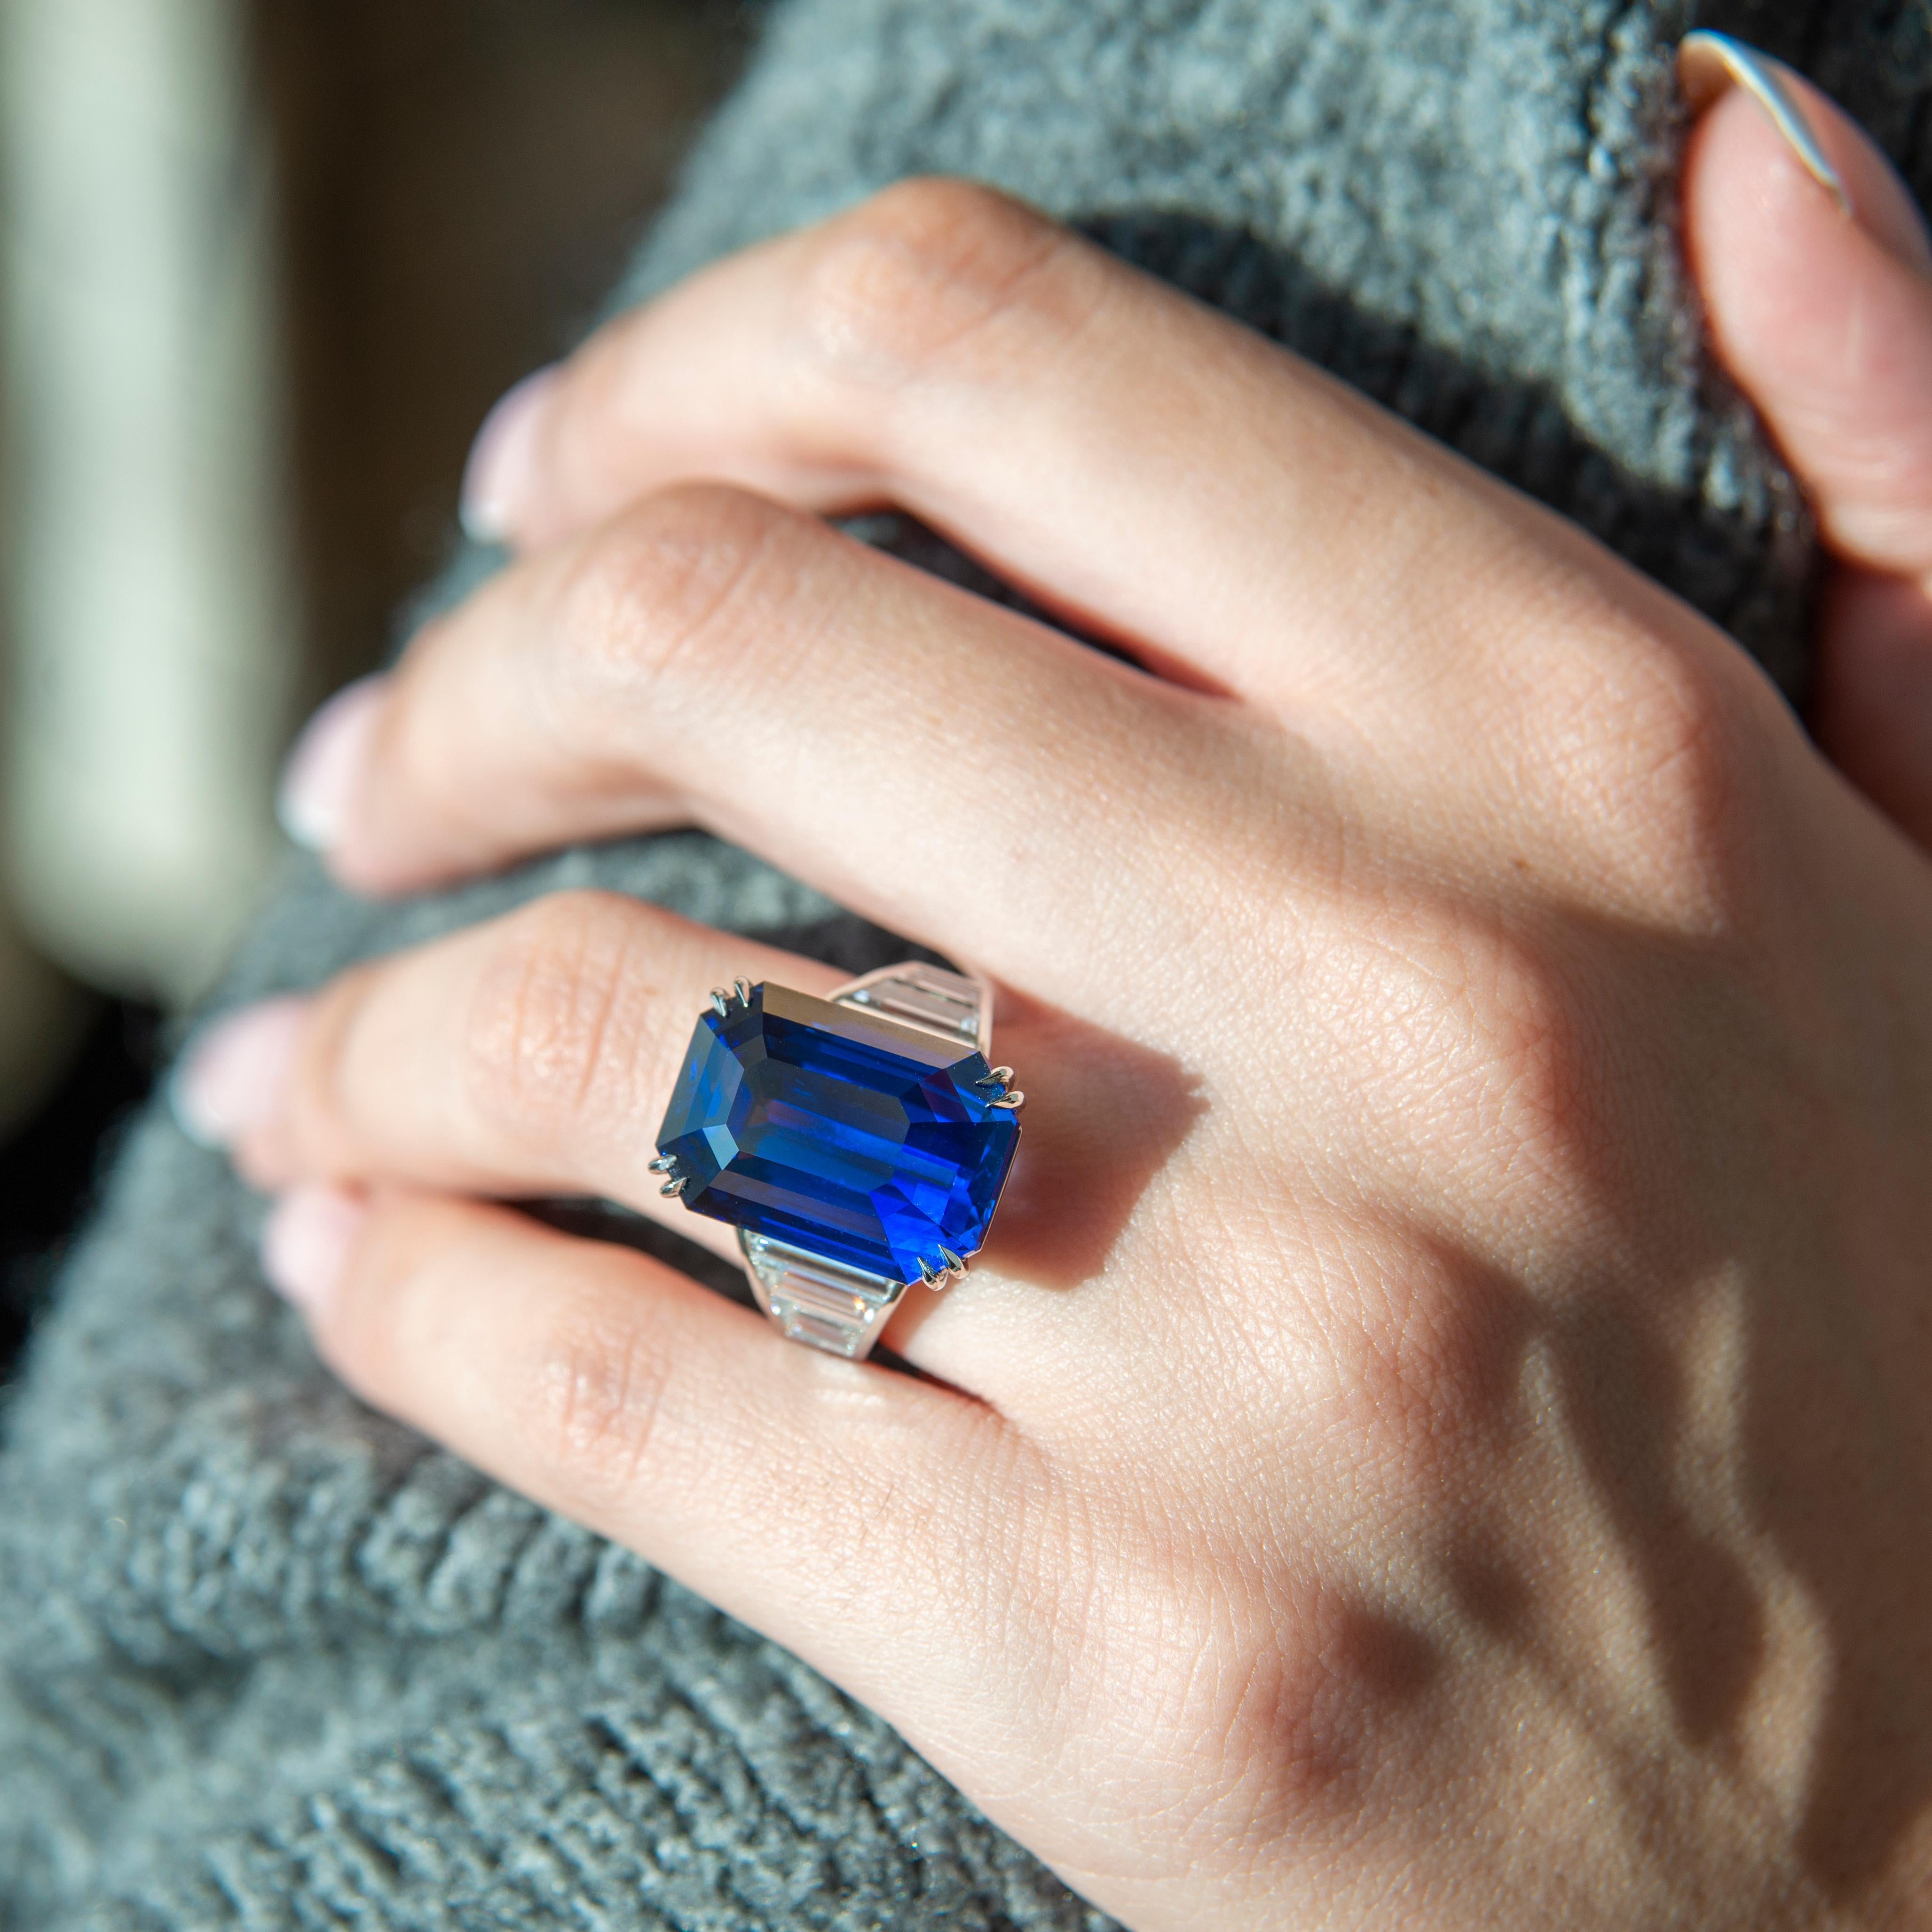 An exceptional emerald cut Ceylon sapphire, truly a gem quality royal blue stone. A sensational deep blue sapphire. High jewelry by Alexander Beverly Hills.
24.92 carats total gemstone weight. 
Emerald cut Sri Lankan sapphire, 22.37 carats, heat,